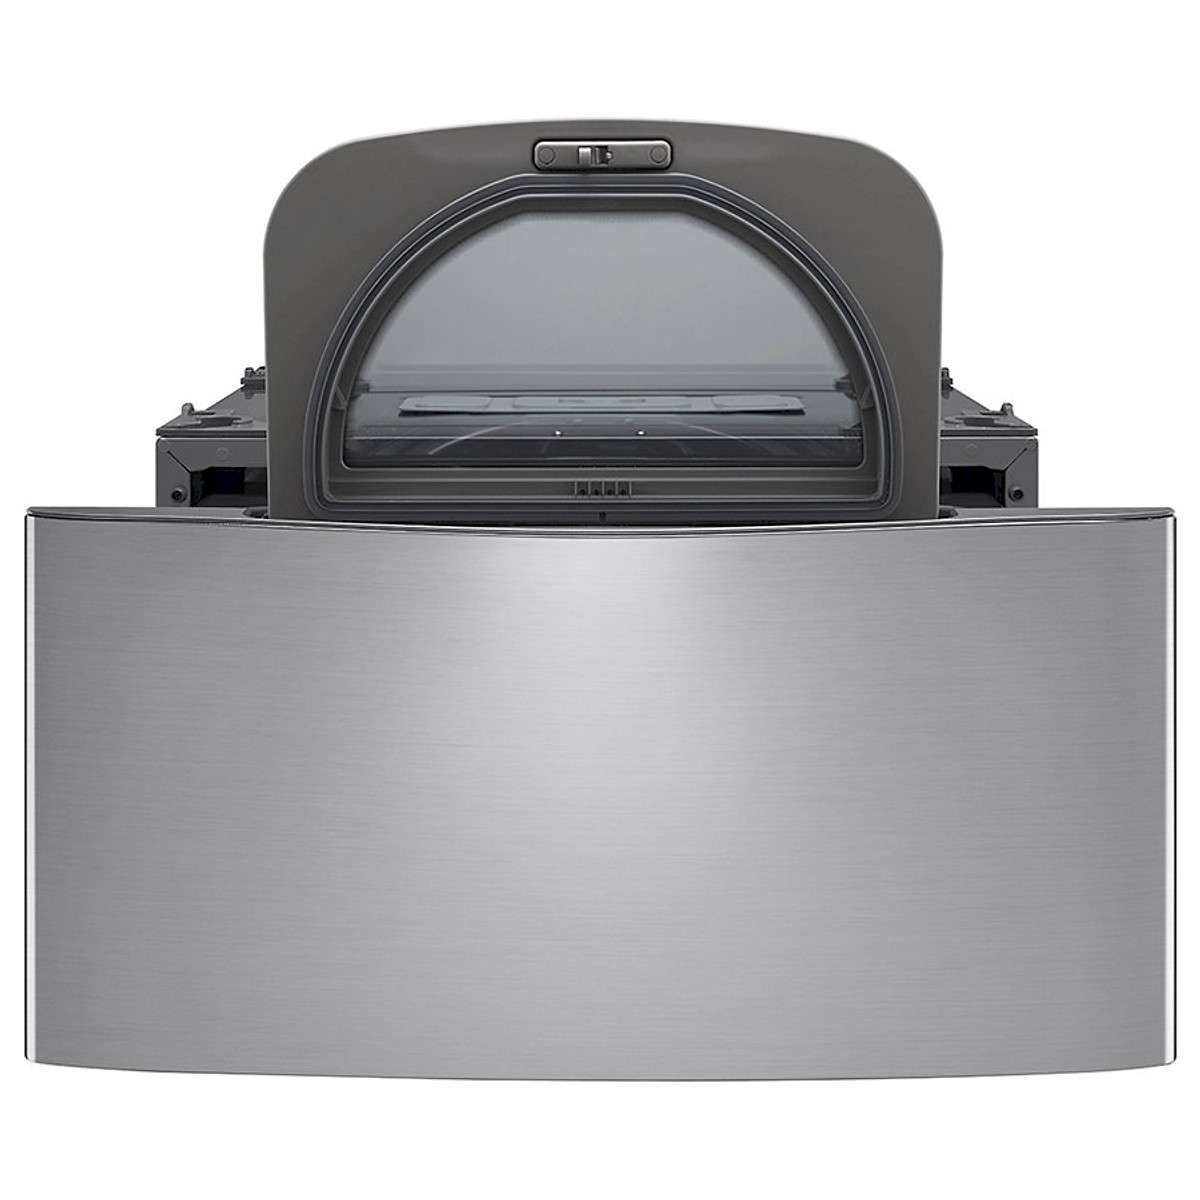 Máy giặt LG Inverter 3.5 kg TC2402NTWV